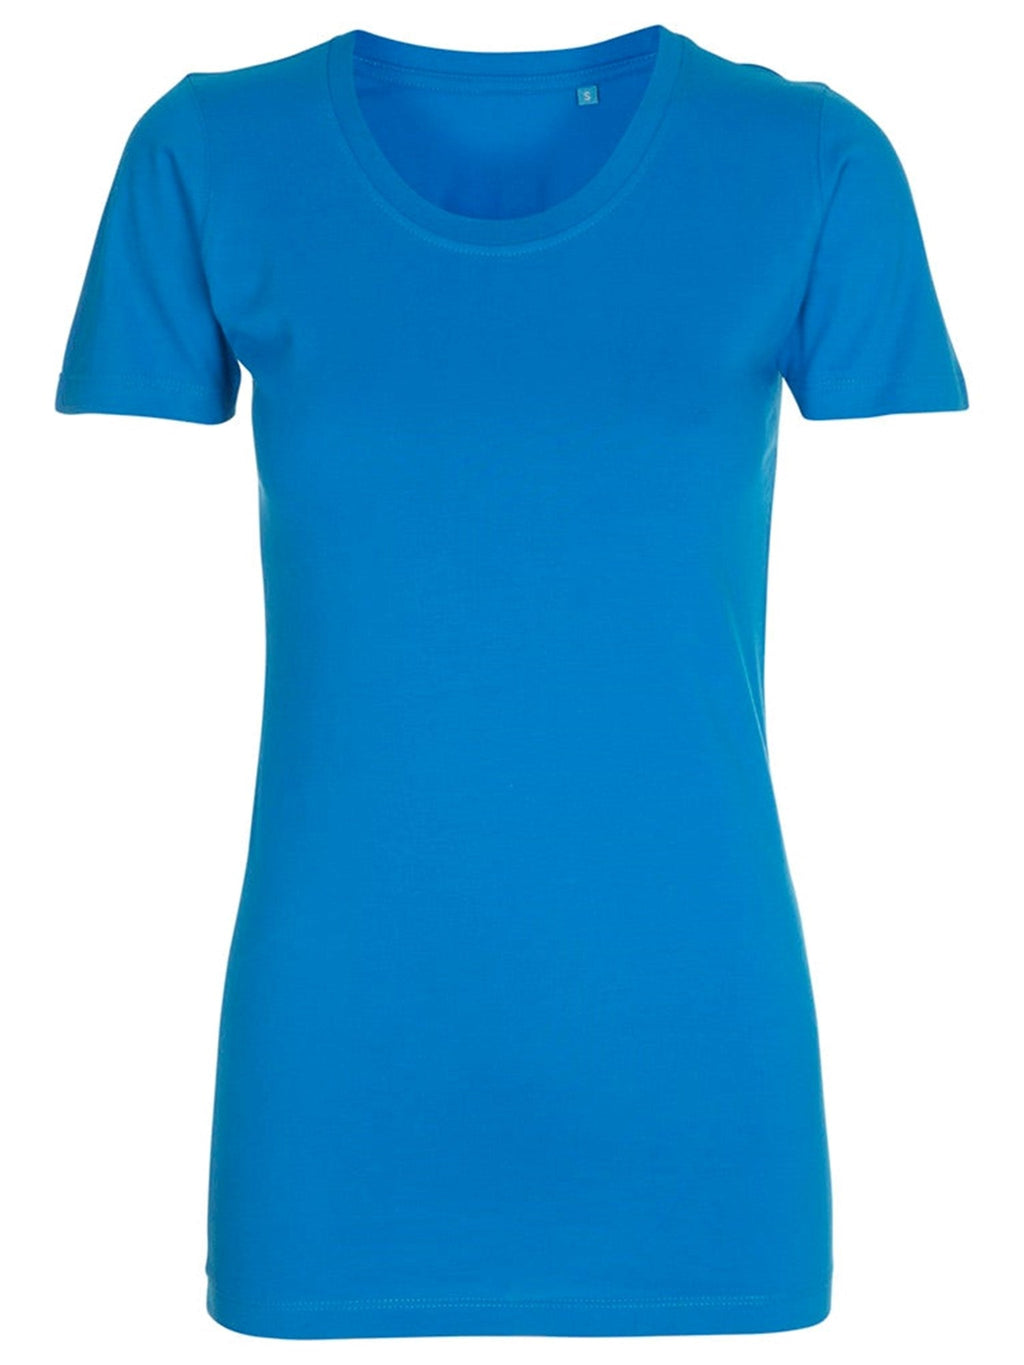 Opremljena majica-Torquoise Blue